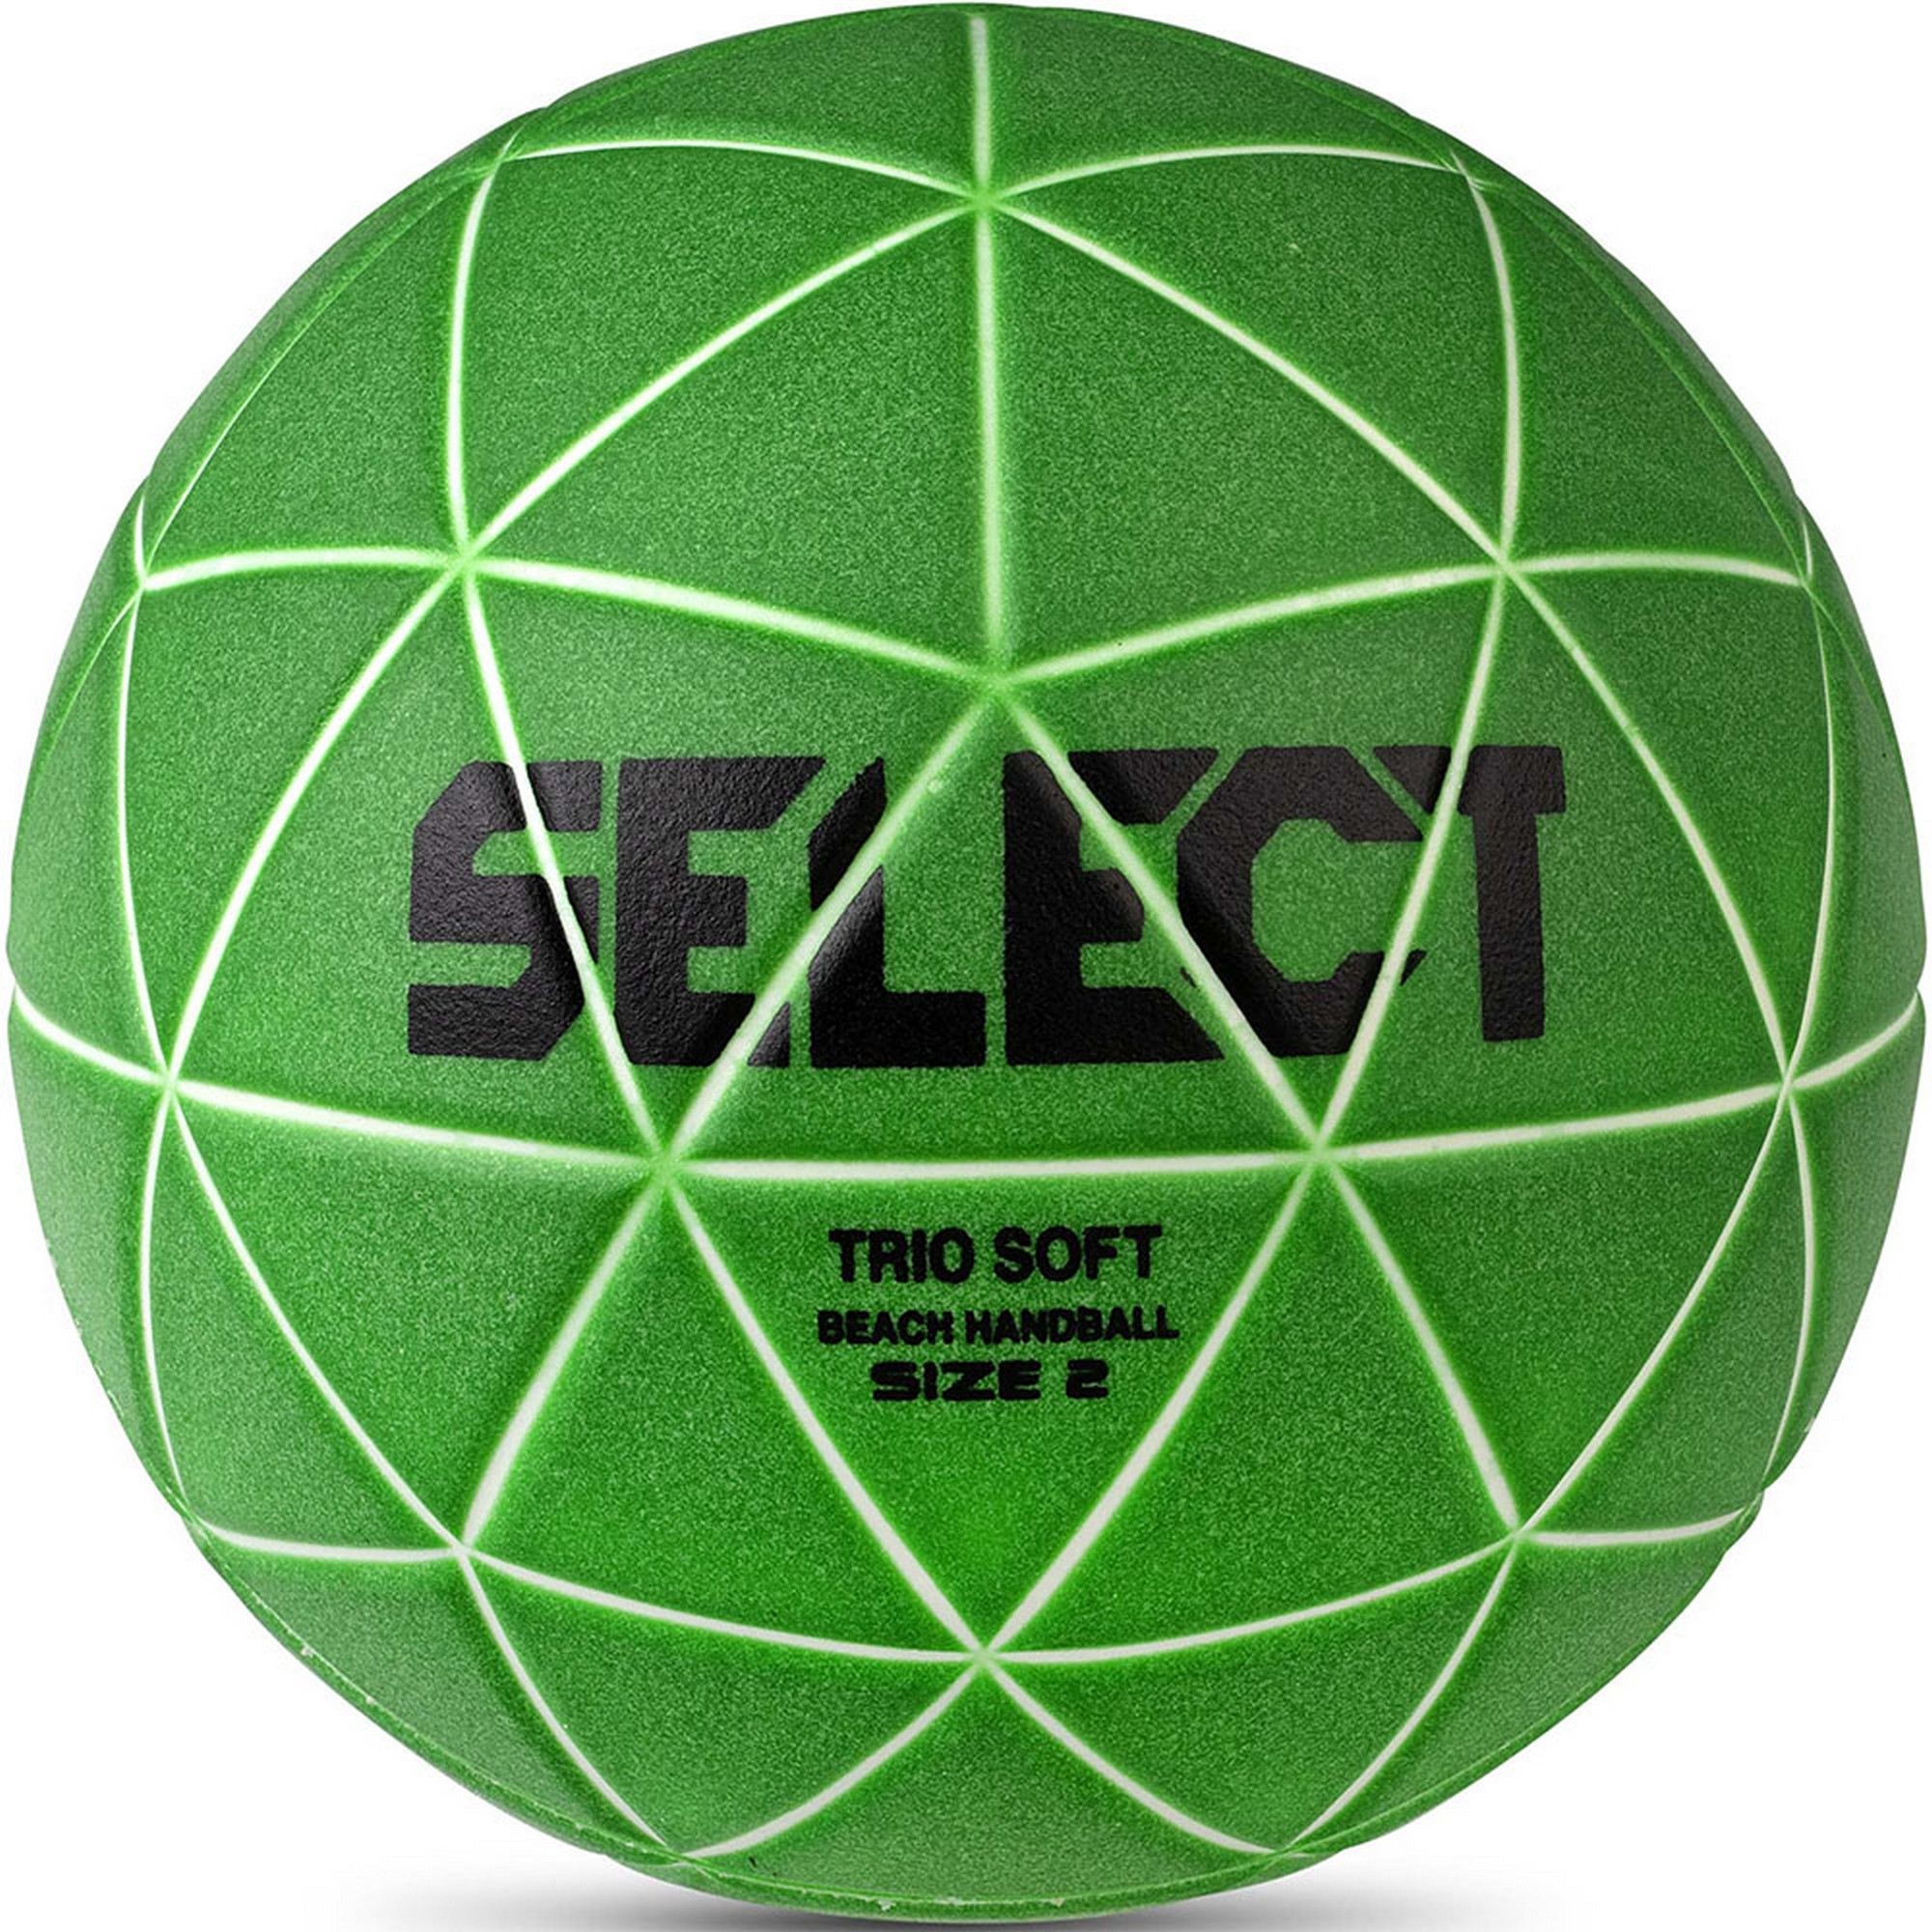 Мяч для пляжного гандбола Select Beach handball v21 250025 р.2 2000_2000